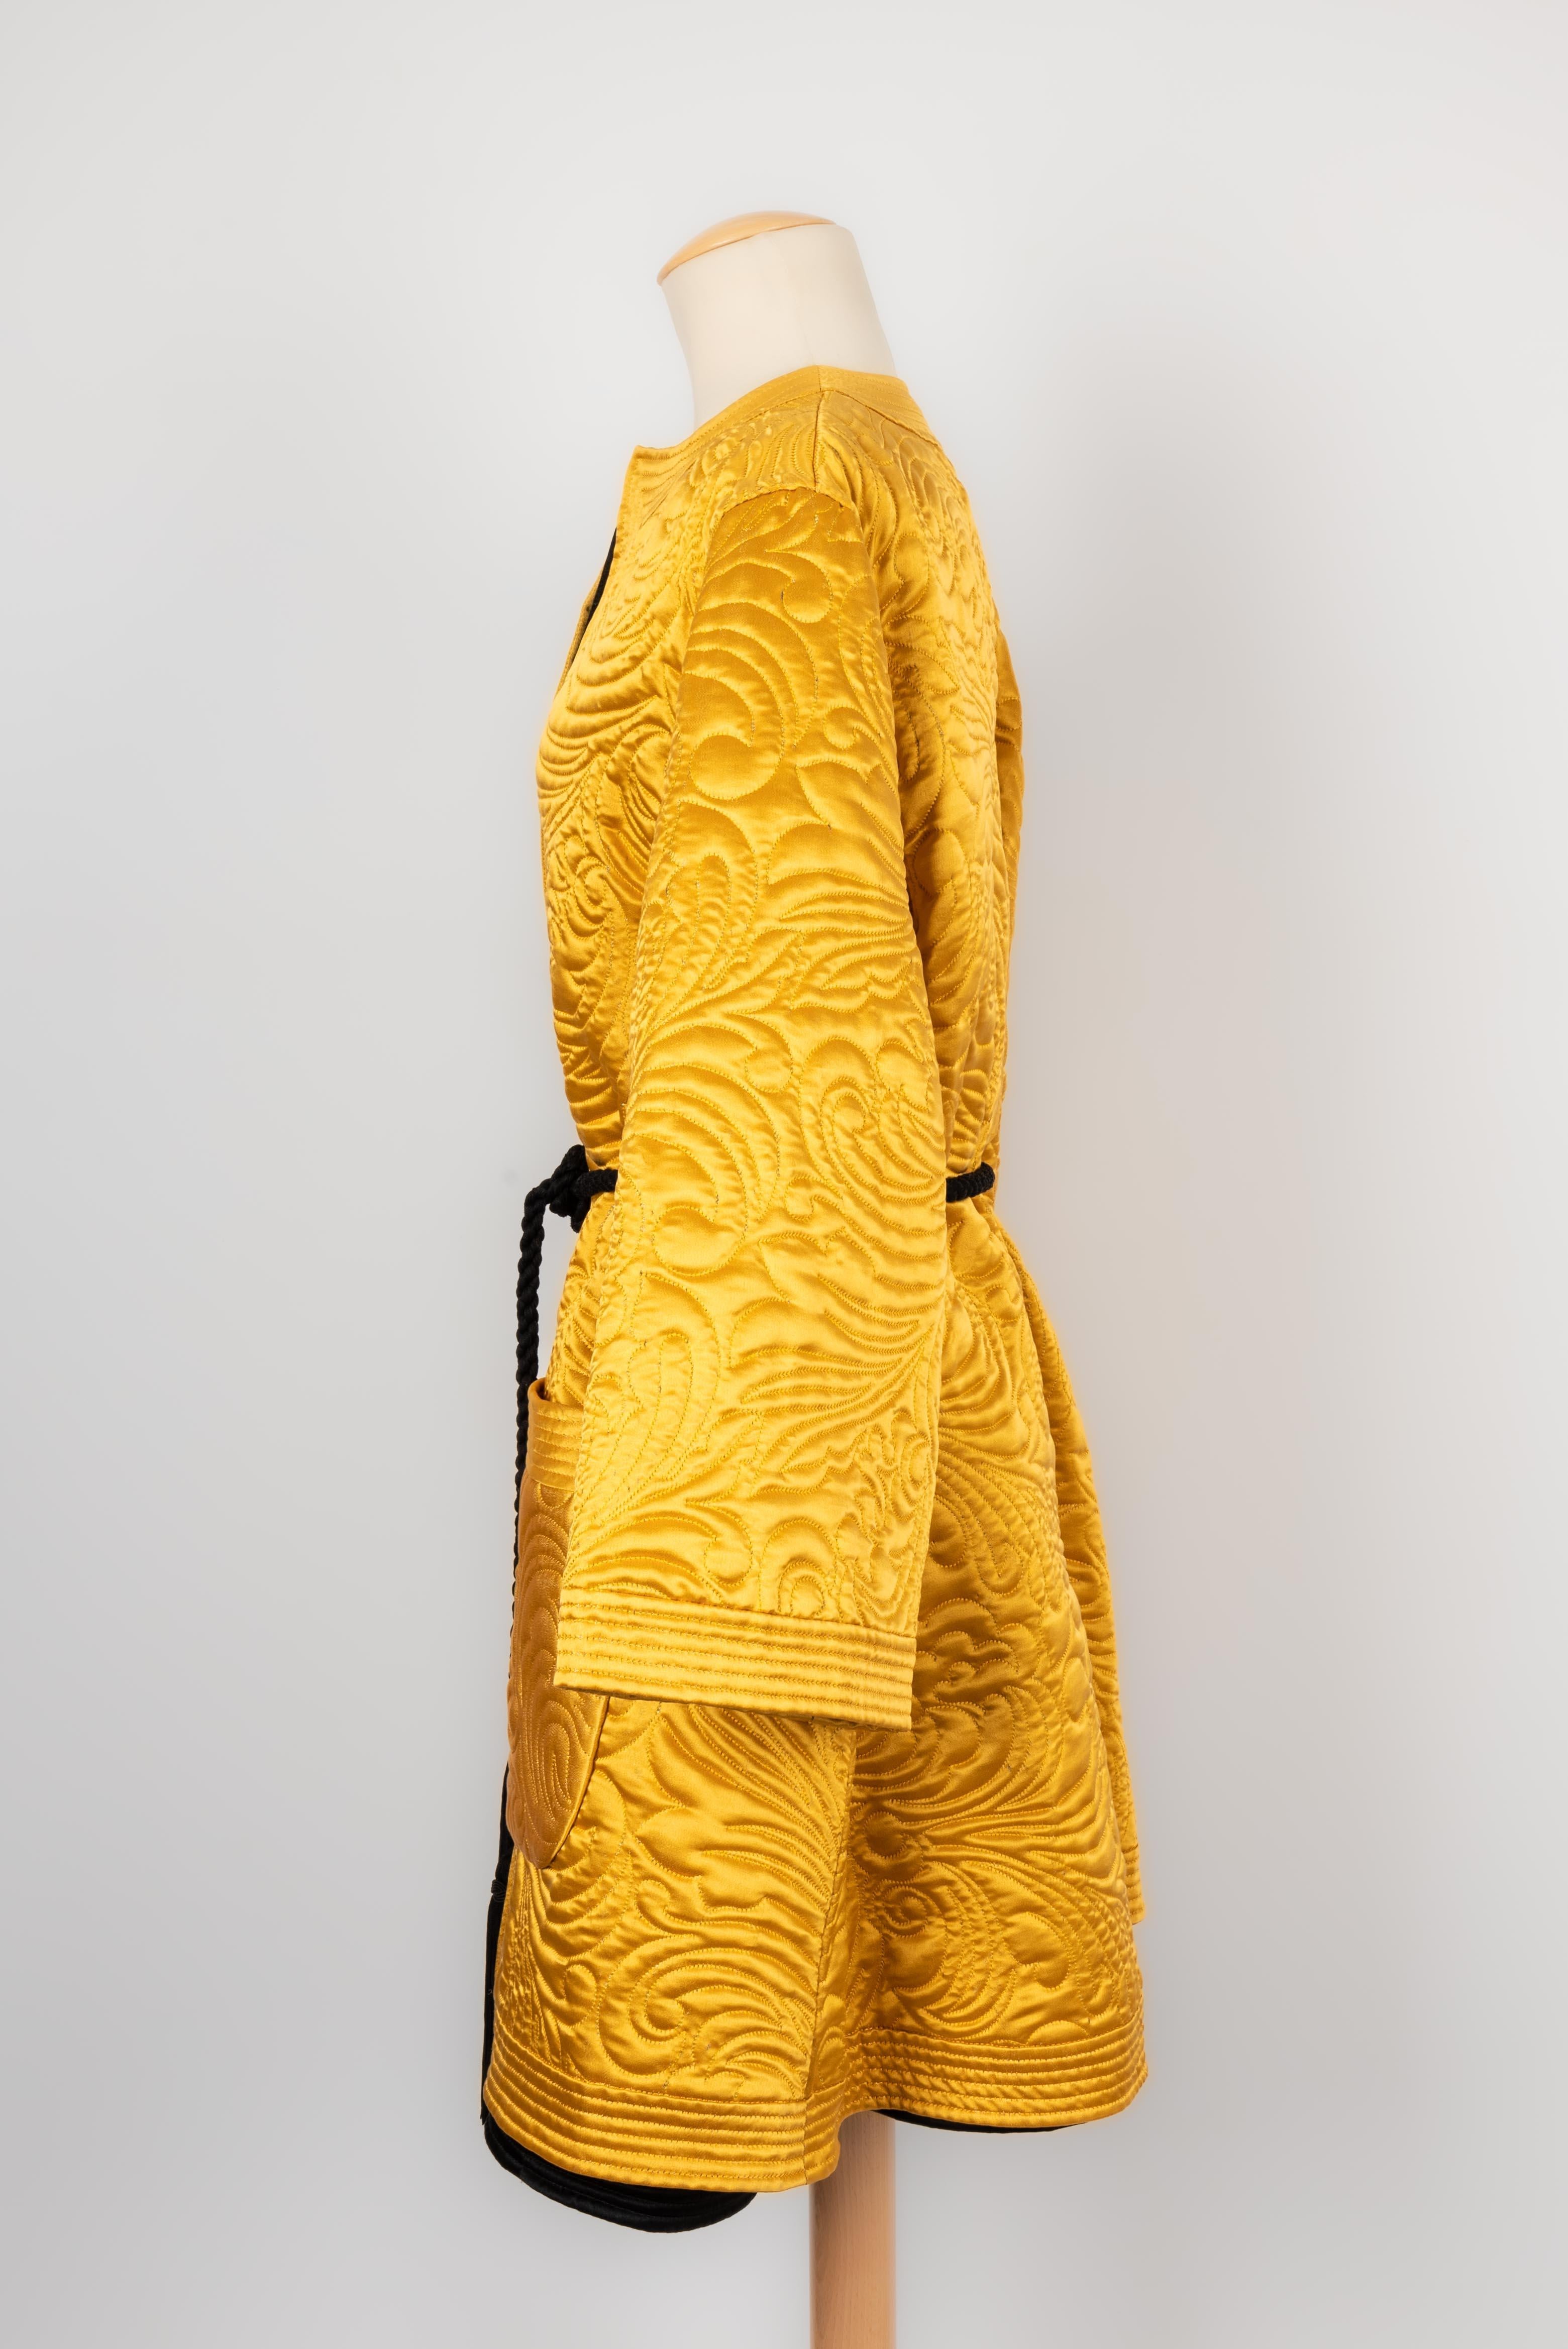 Valentino Haute Couture kimonos double jackets 1990 In Good Condition For Sale In SAINT-OUEN-SUR-SEINE, FR